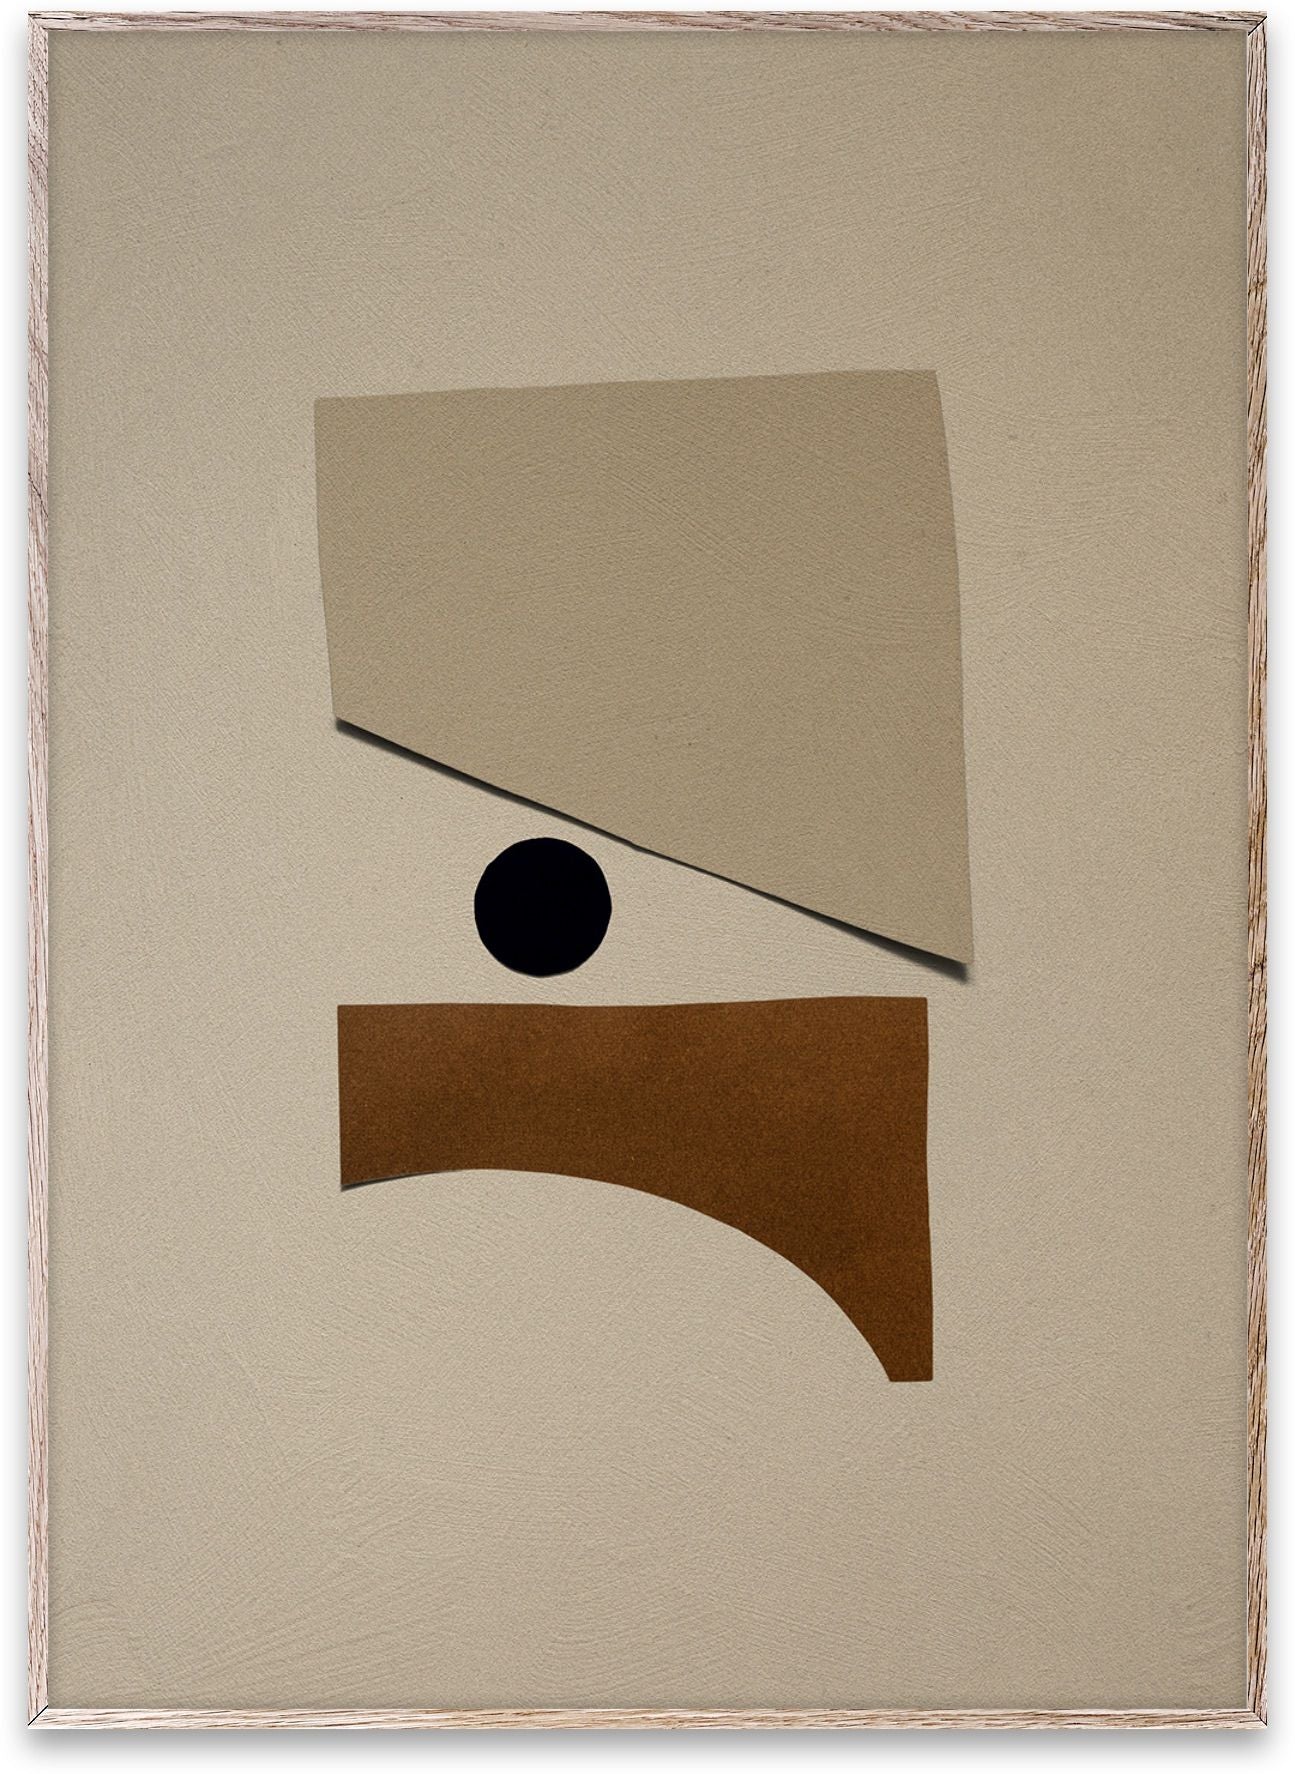 Paper Collective Tipppunkt 01 Poster, 30x40 cm